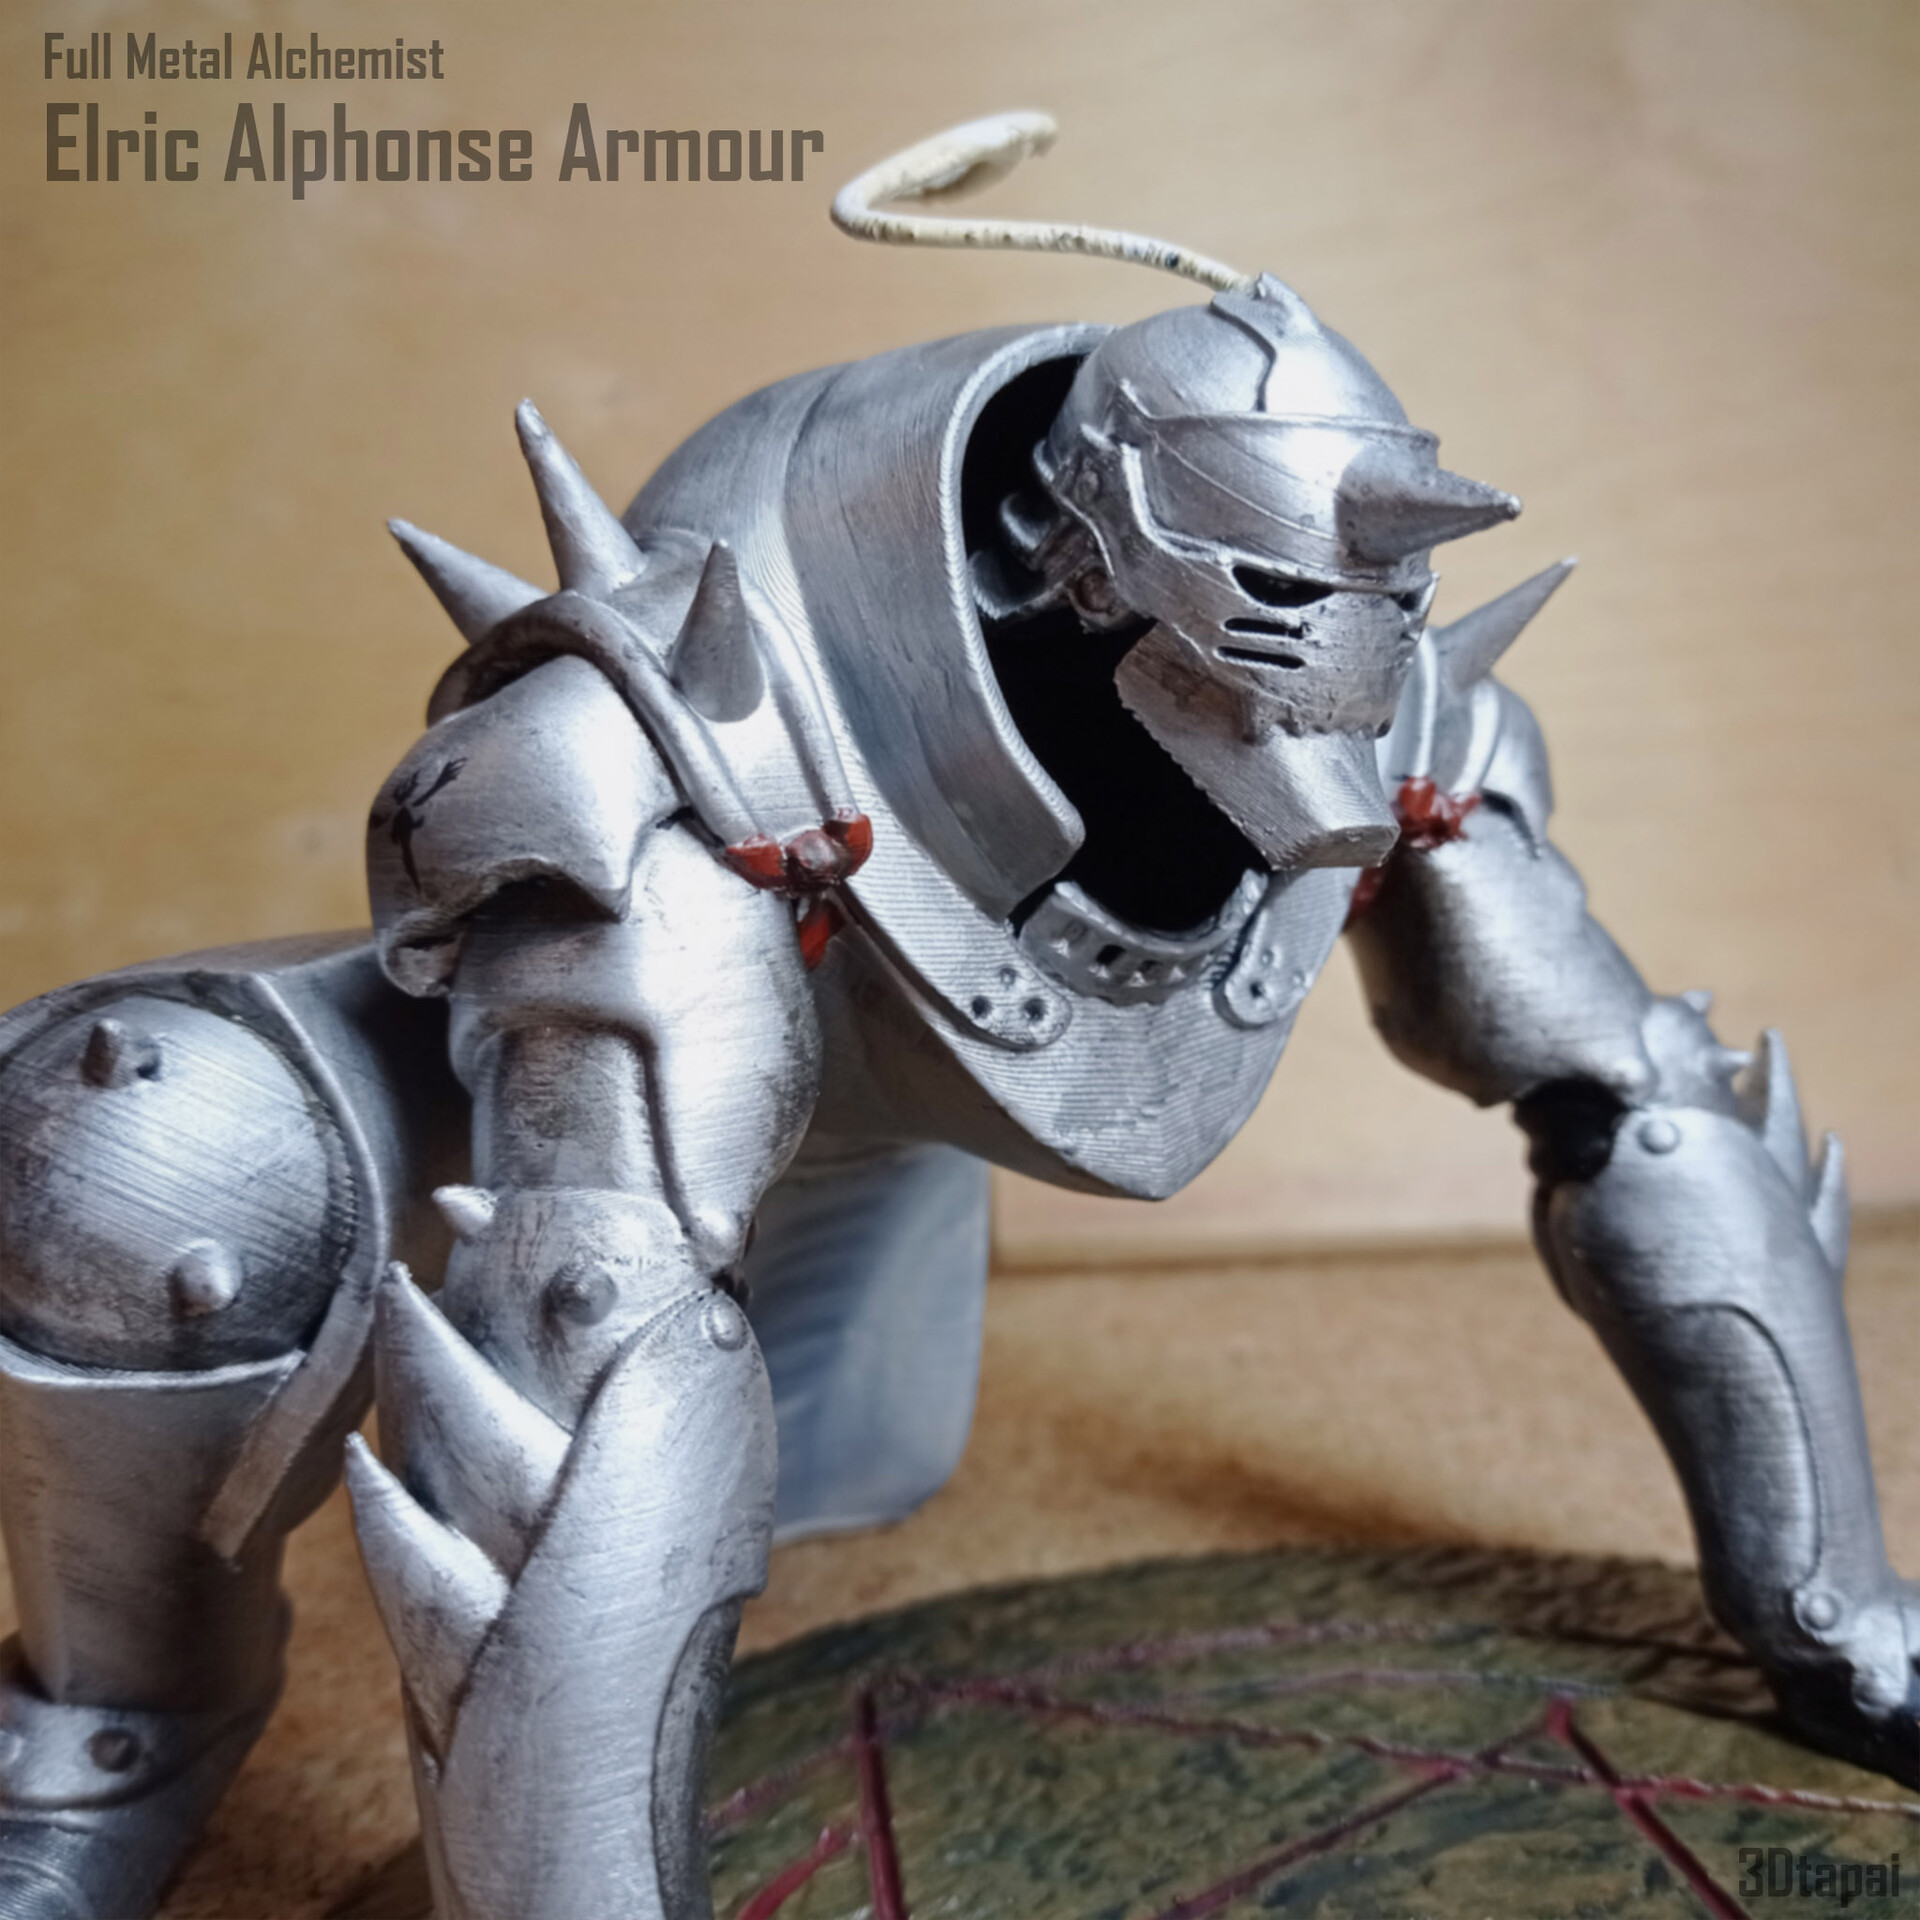 Fullmetal Alchemist Alphonse Armor